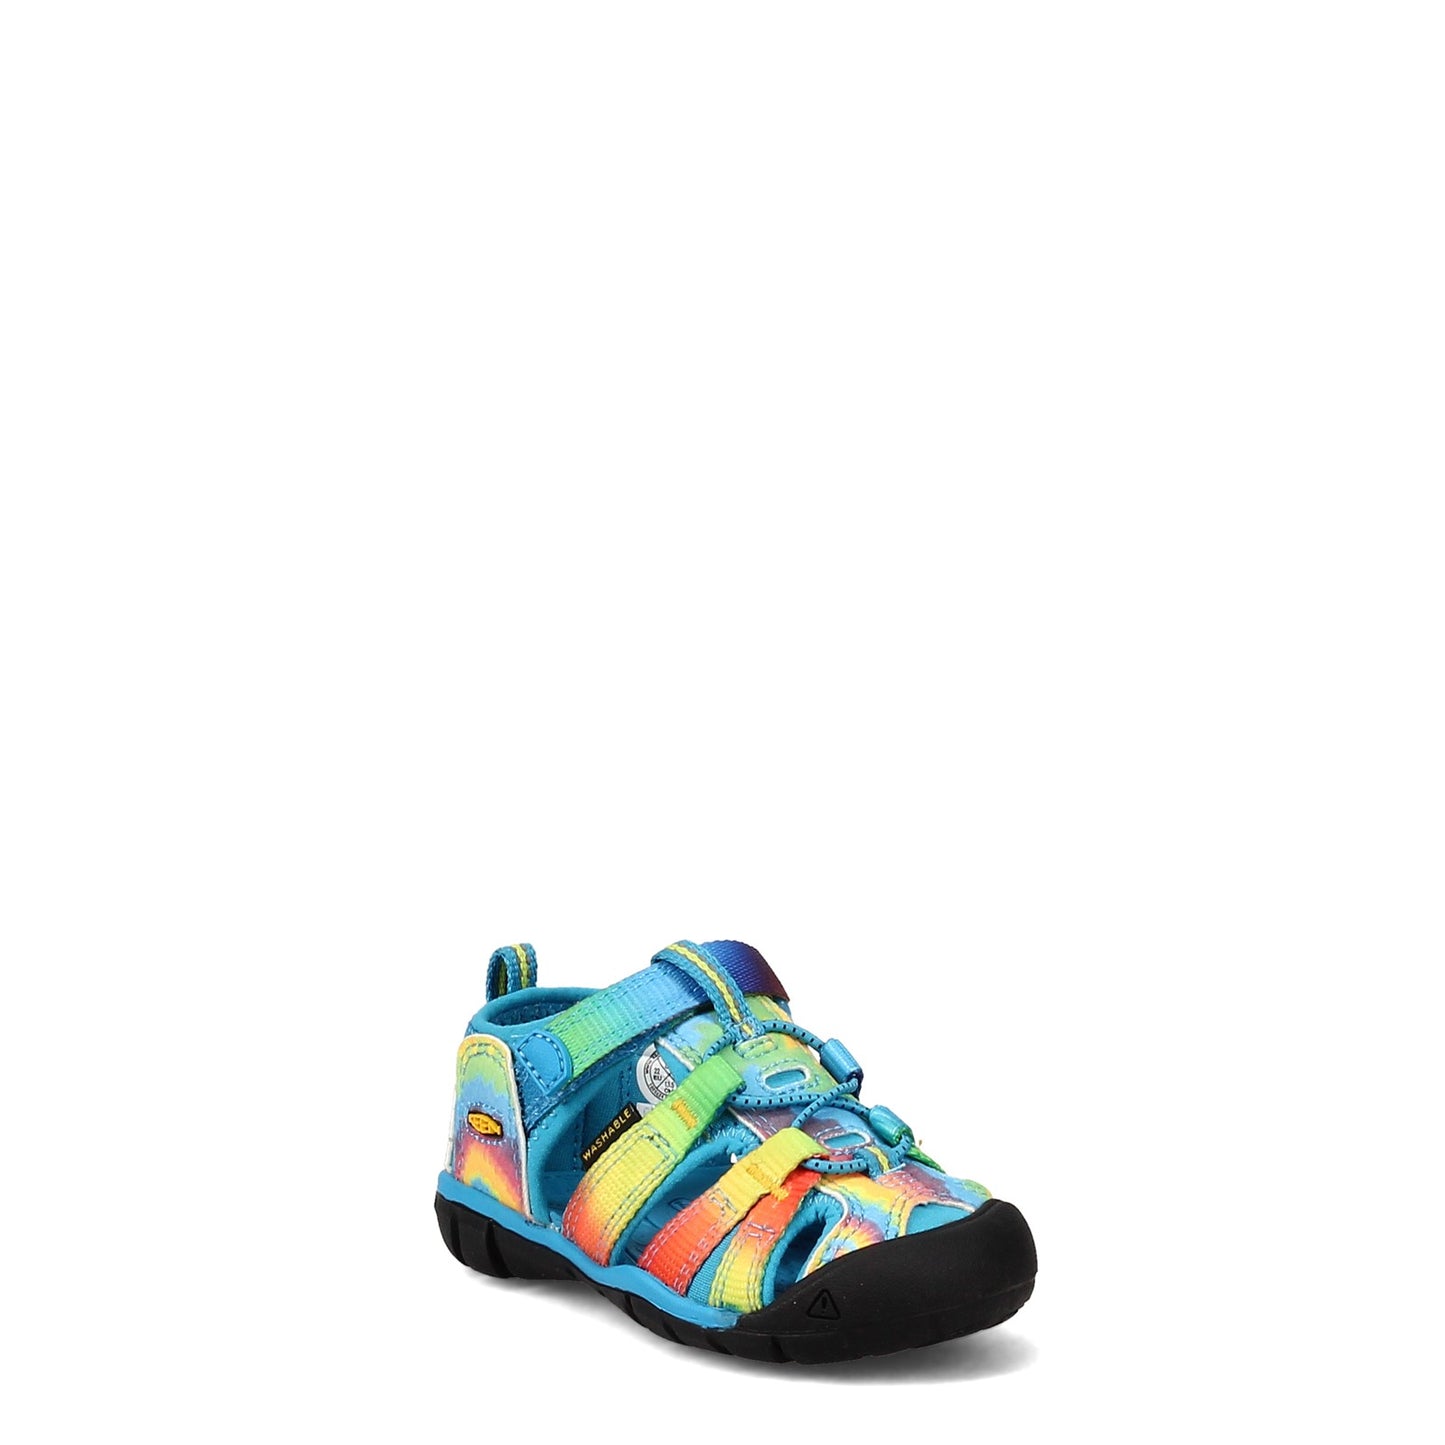 Peltz Shoes  Girl's Keen Seacamp II CNX Sandal - Toddler Vivid Blue/Original Tie Dye 1025224